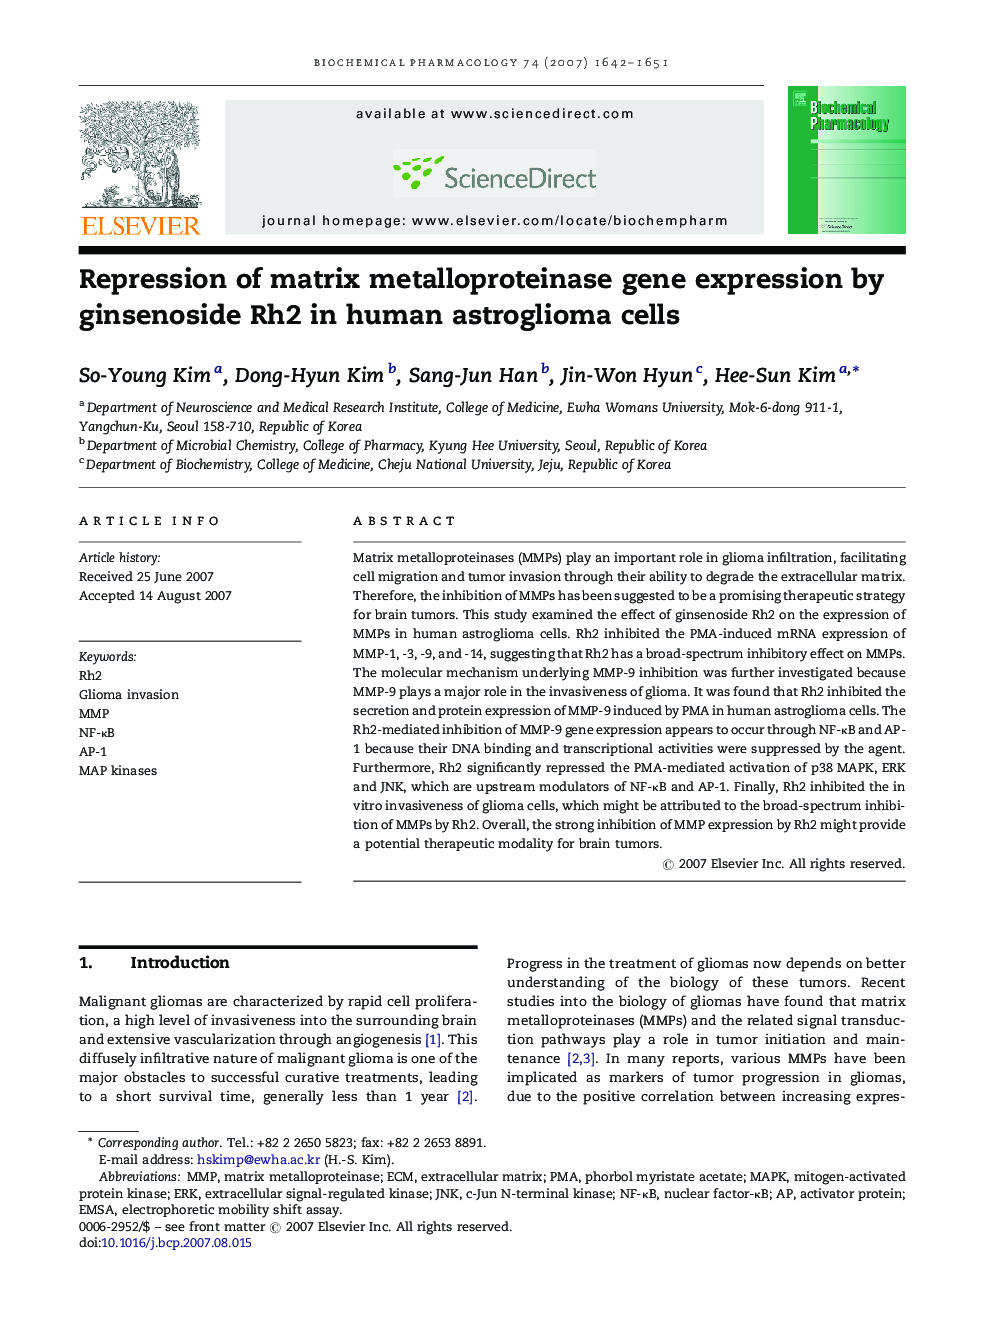 Repression of matrix metalloproteinase gene expression by ginsenoside Rh2 in human astroglioma cells